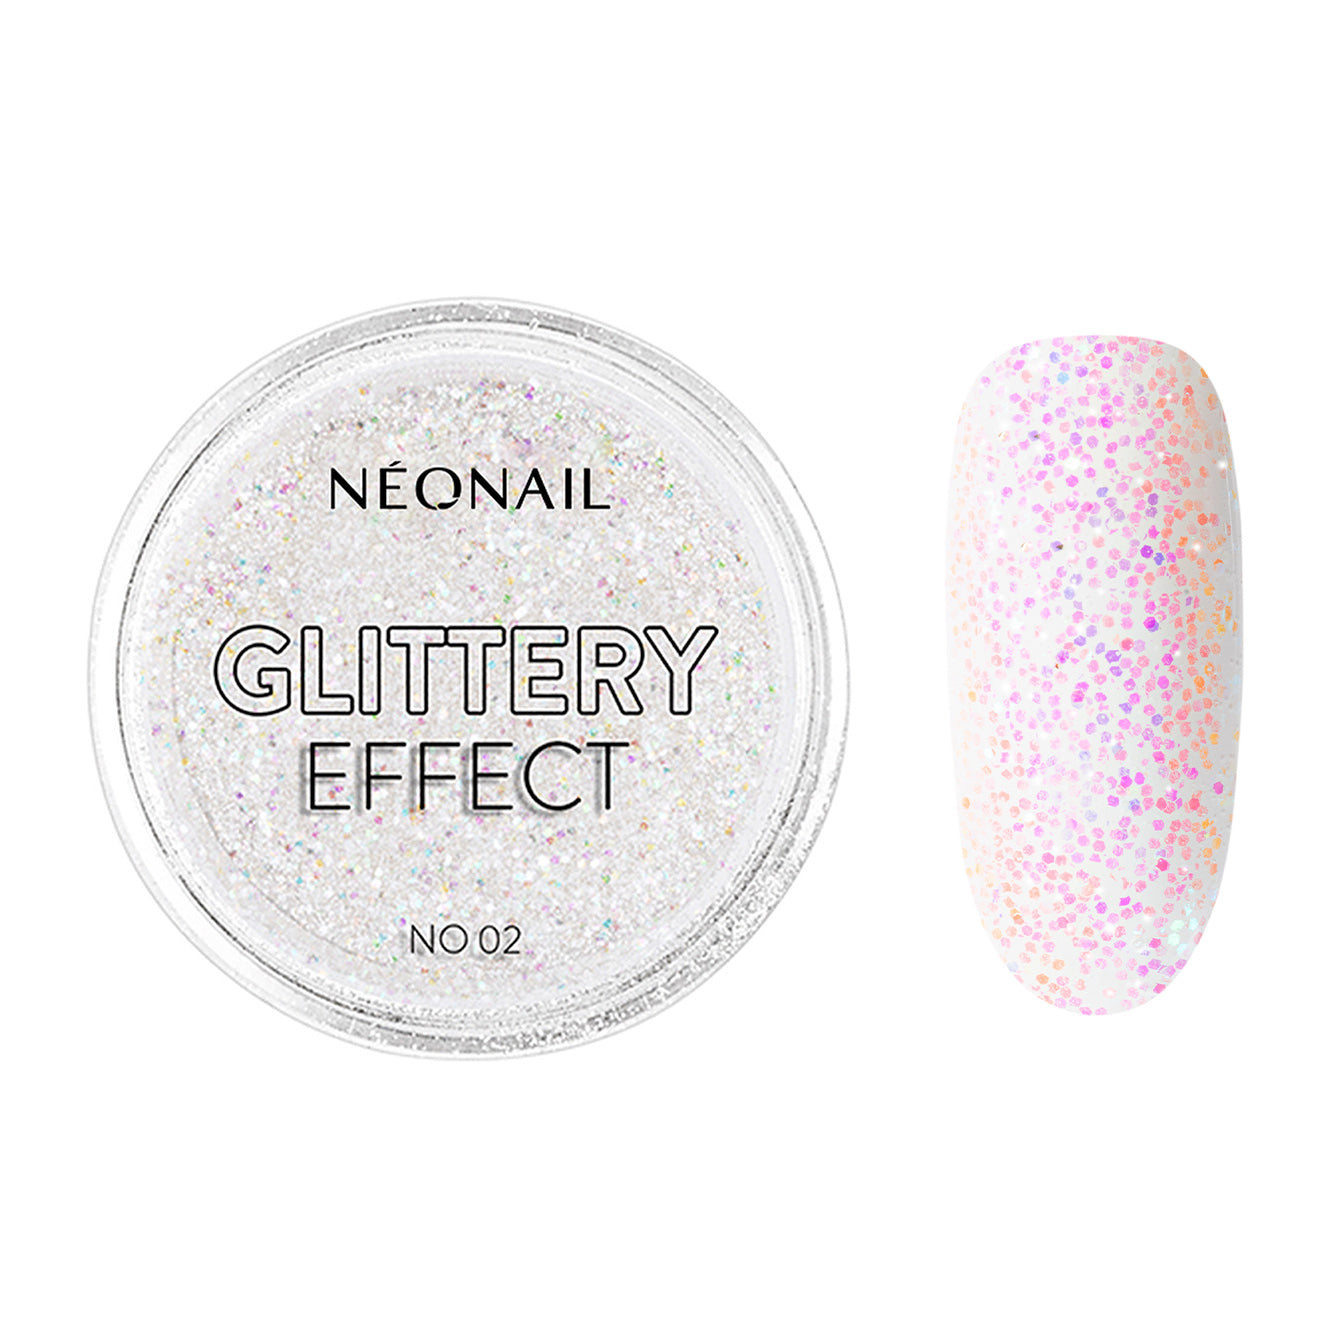 Neglepynt - Glittery Effect No 02 - 2g-Neglepynt-NeoNail-NR Kosmetik